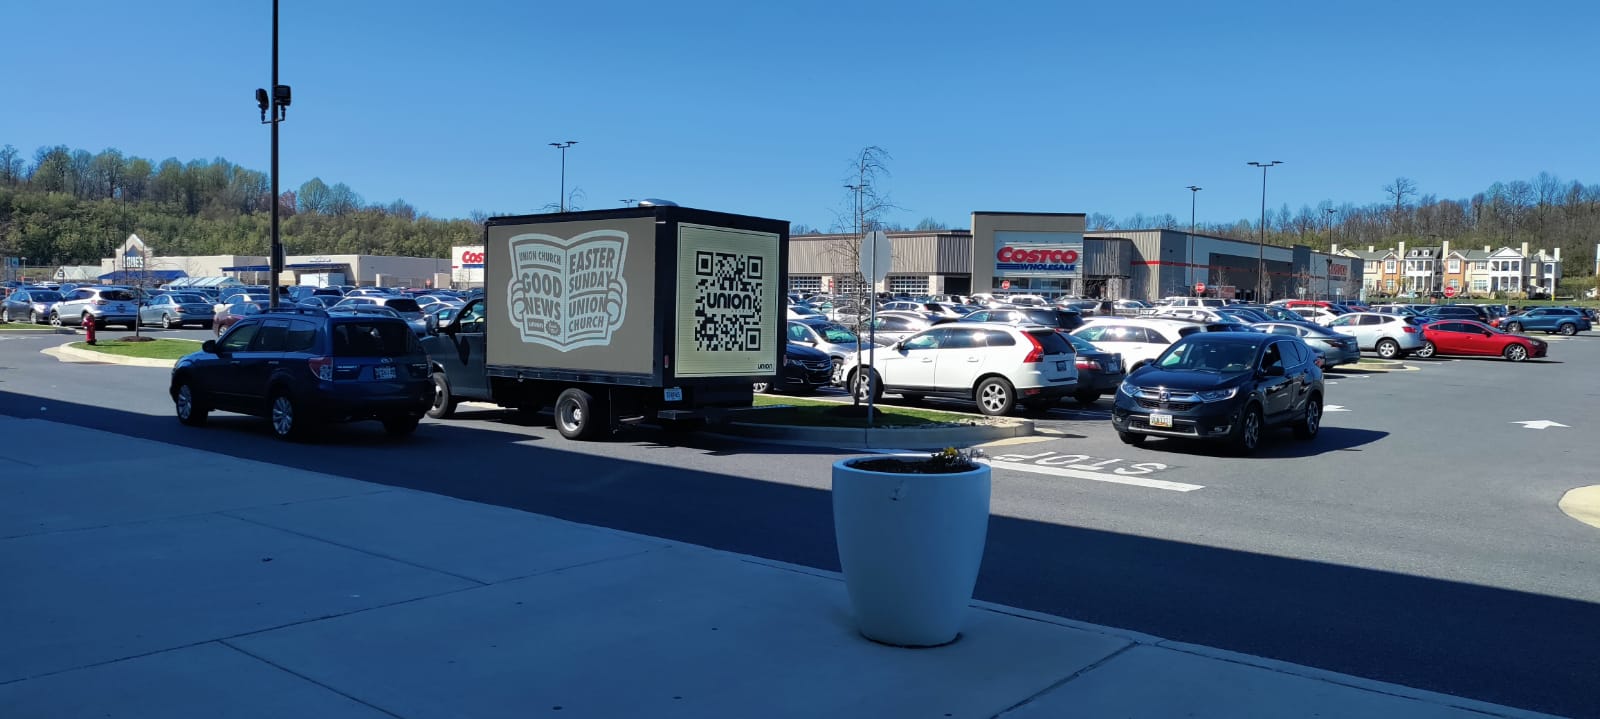 Syracuse Digital Mobile billboard trucks (3)